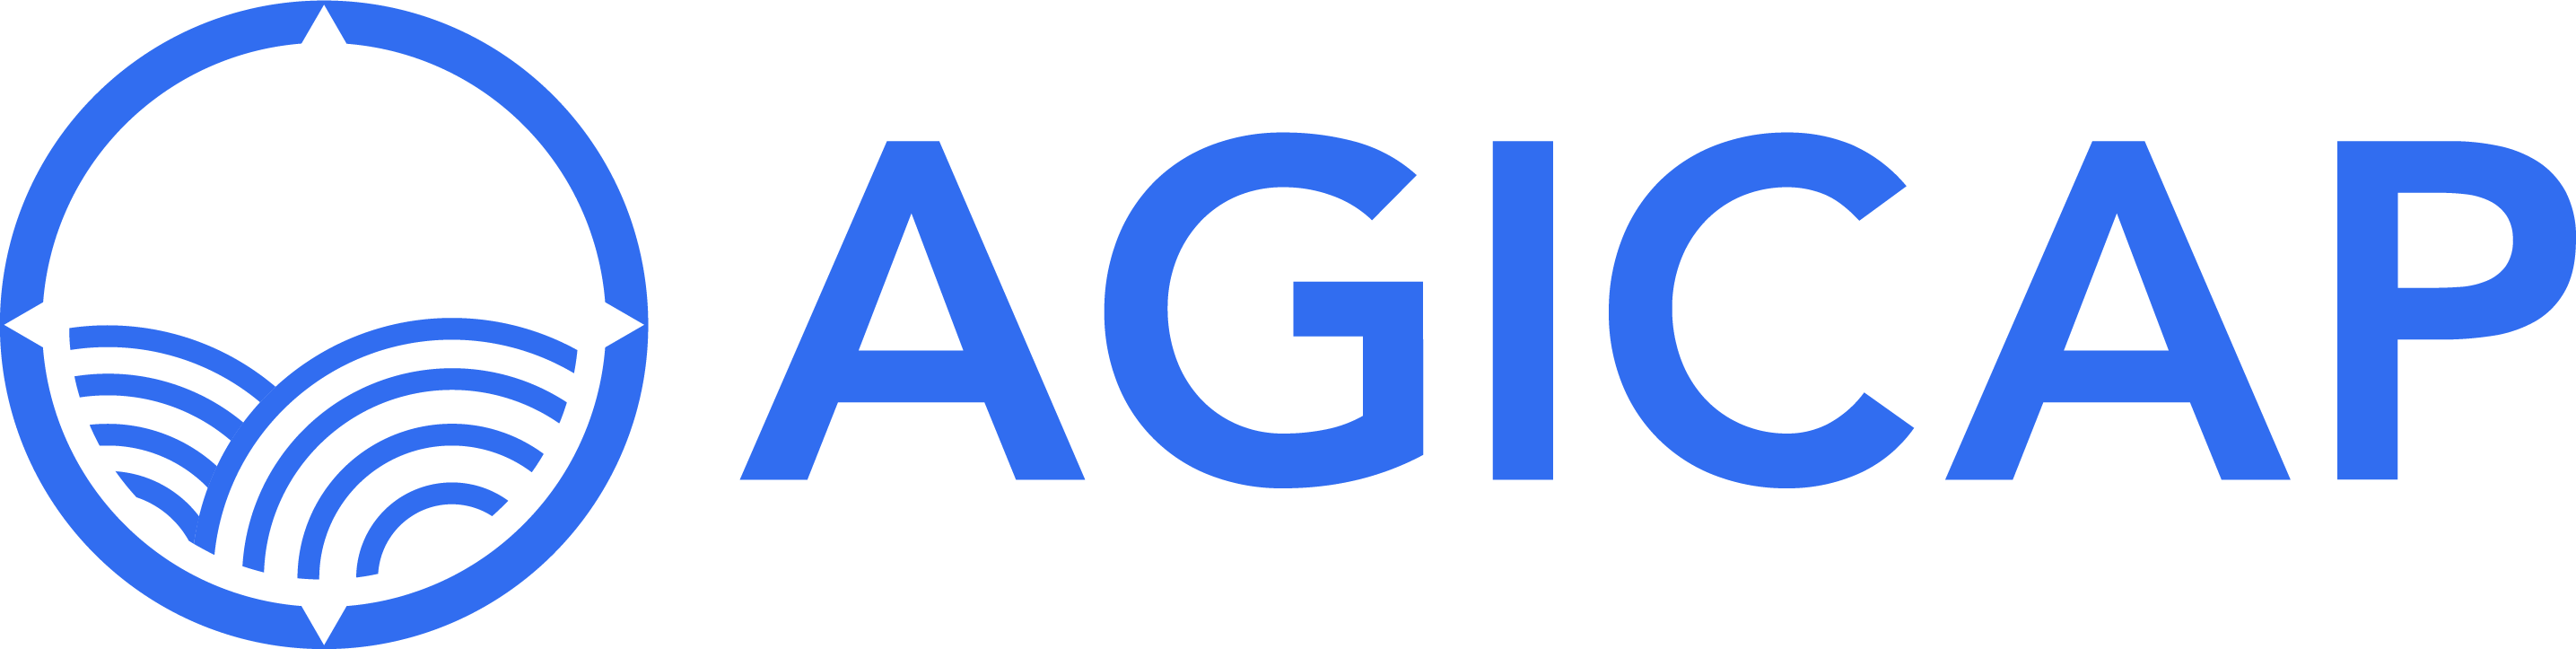 Logo-Agicap-horizontal-2